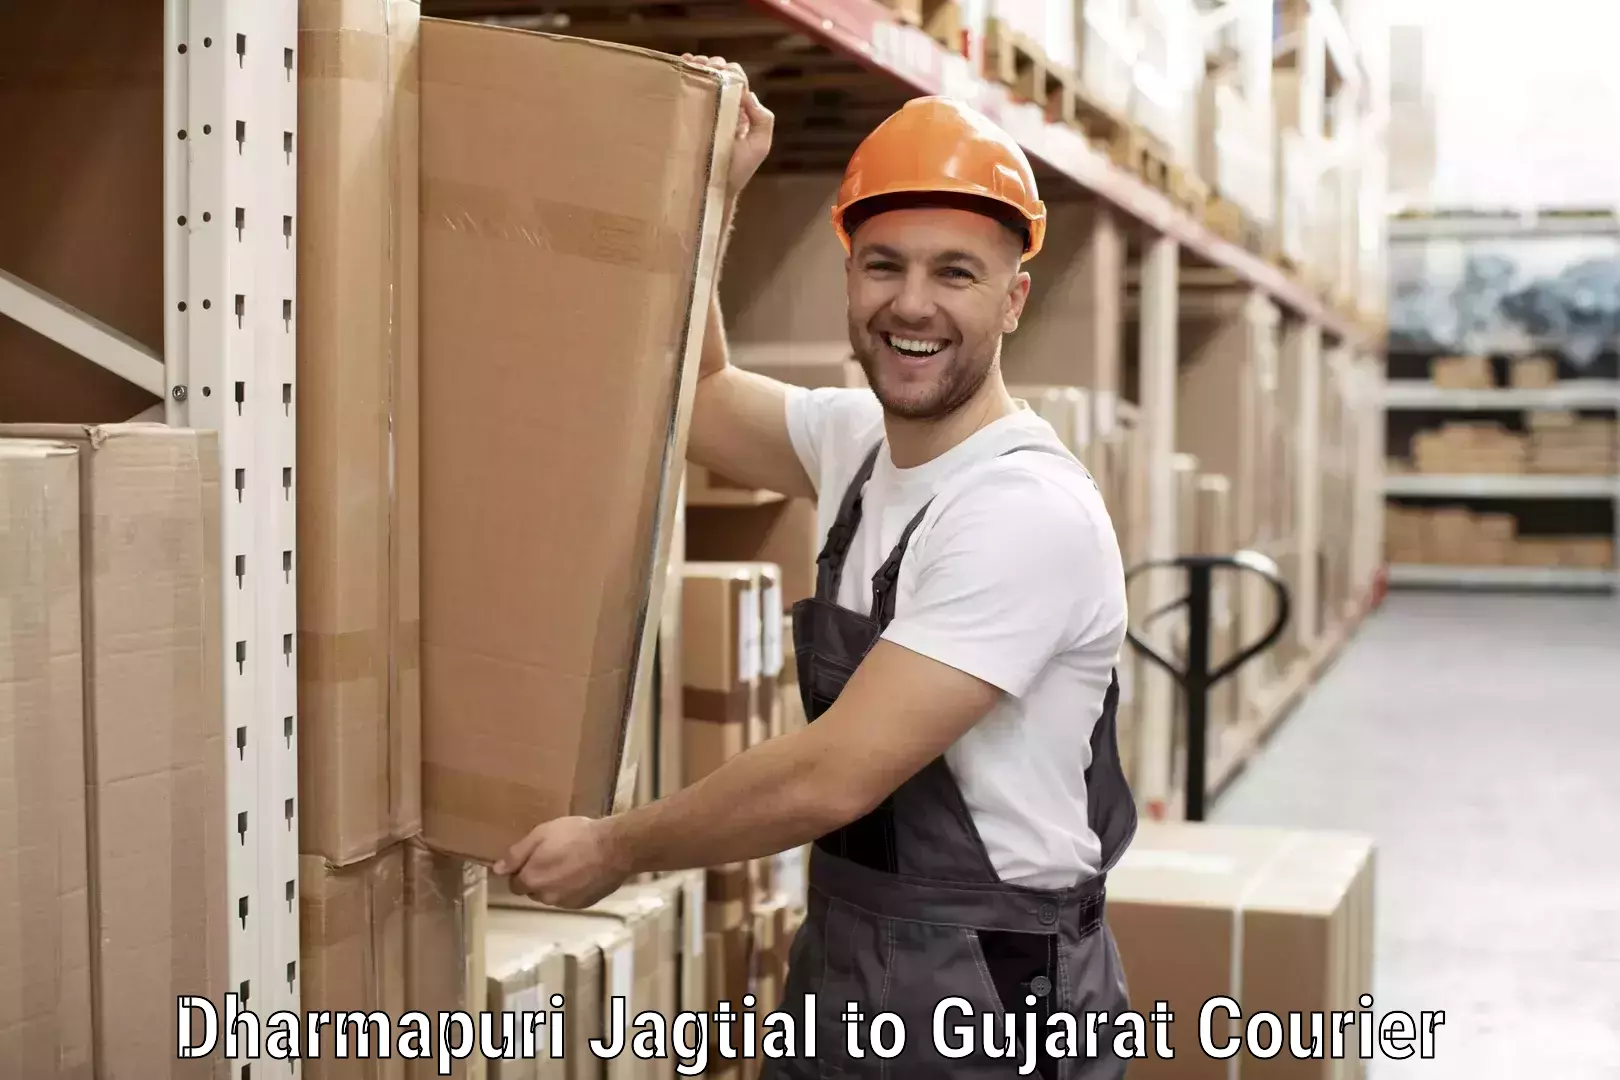 Smart shipping technology Dharmapuri Jagtial to Surat